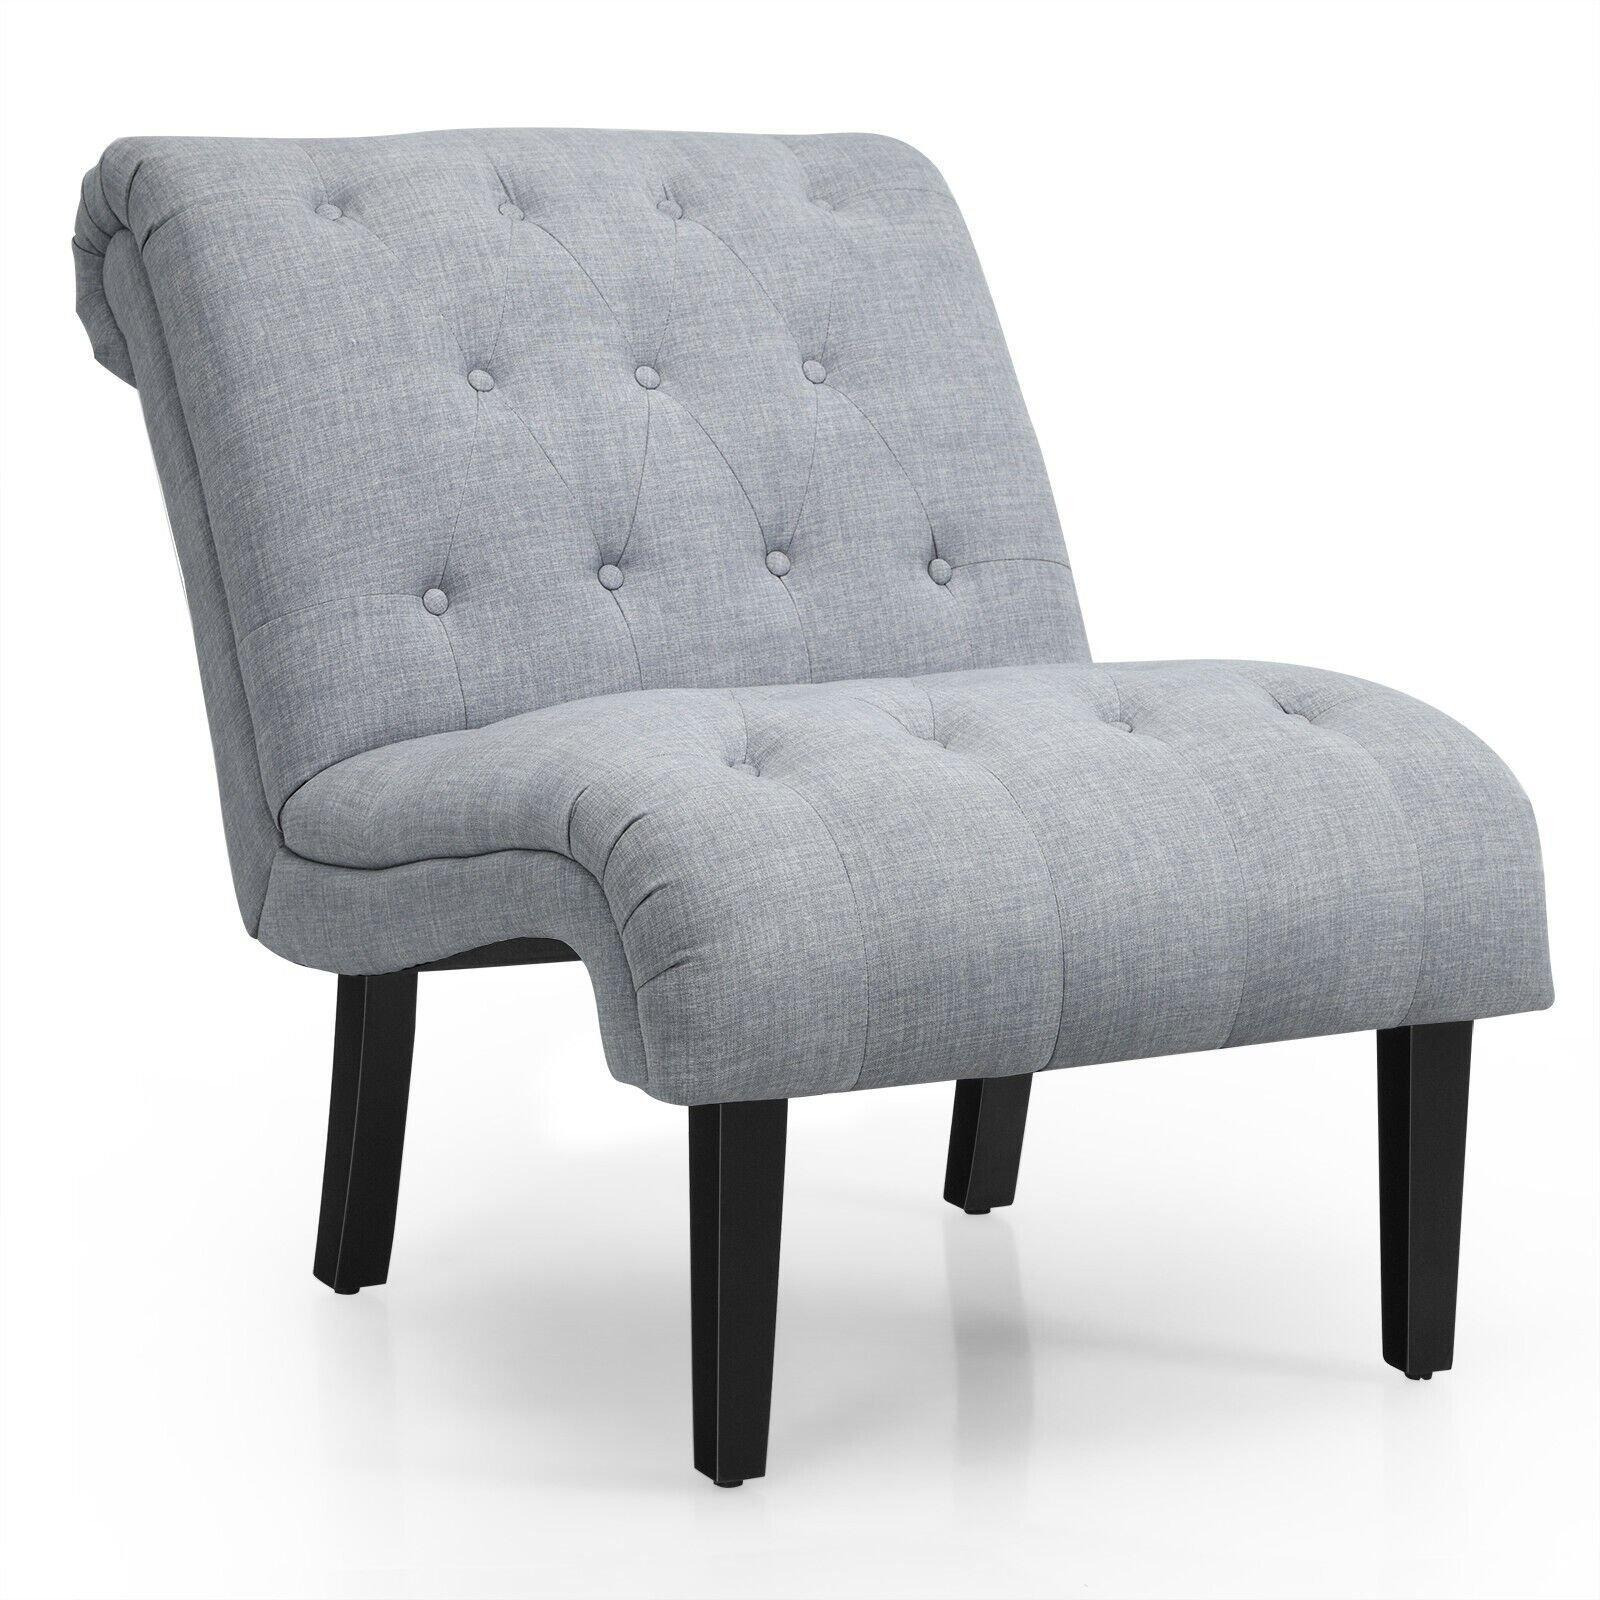 Modern Armless Accent Chair Ergonomic Leisure Chair W/ Backrest & Overstuffed Seat - image 1